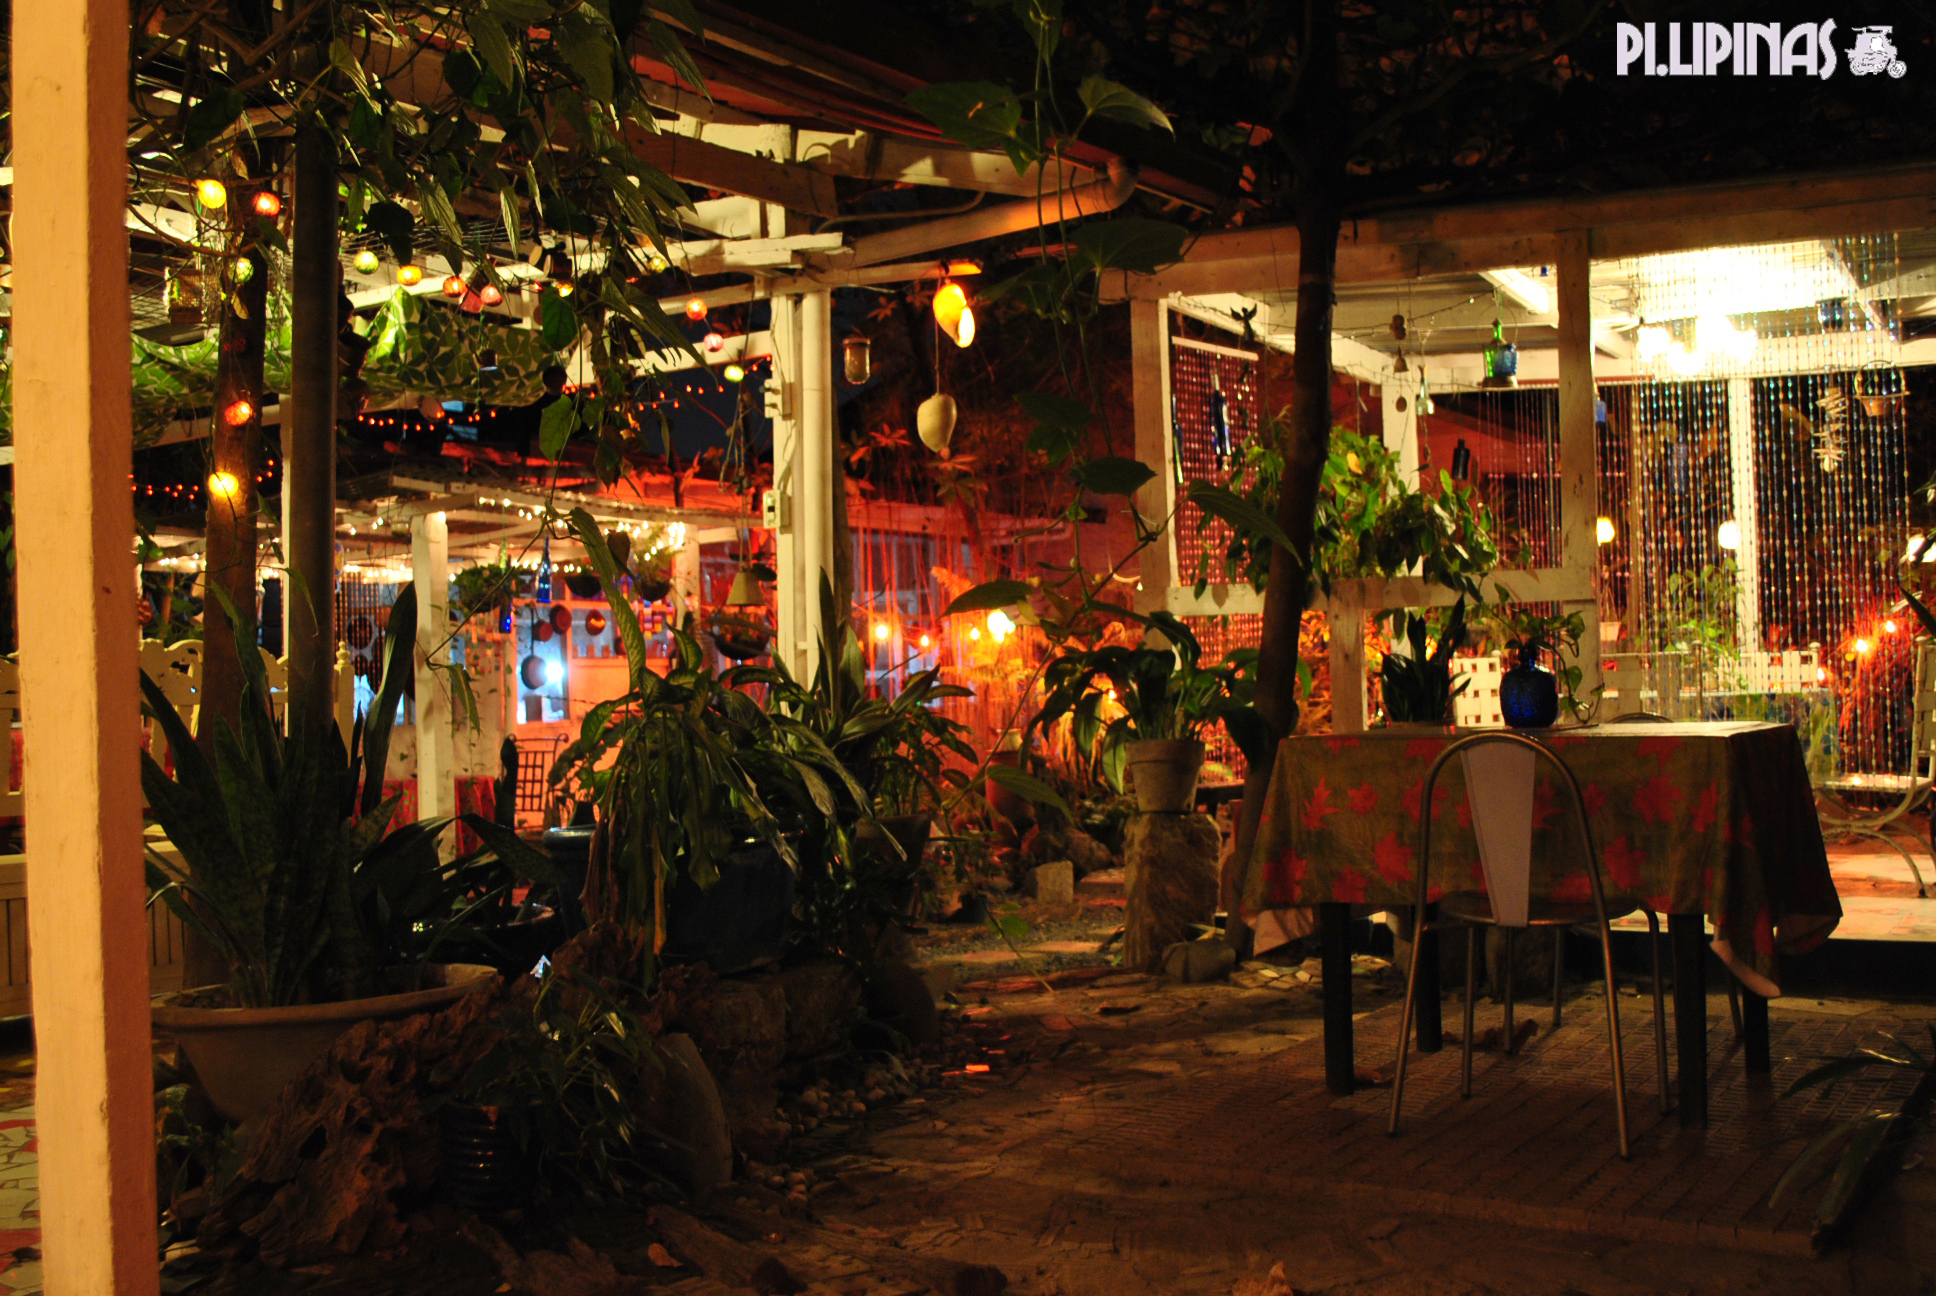 Isabelo’s Secret Garden Restaurant, Marikina